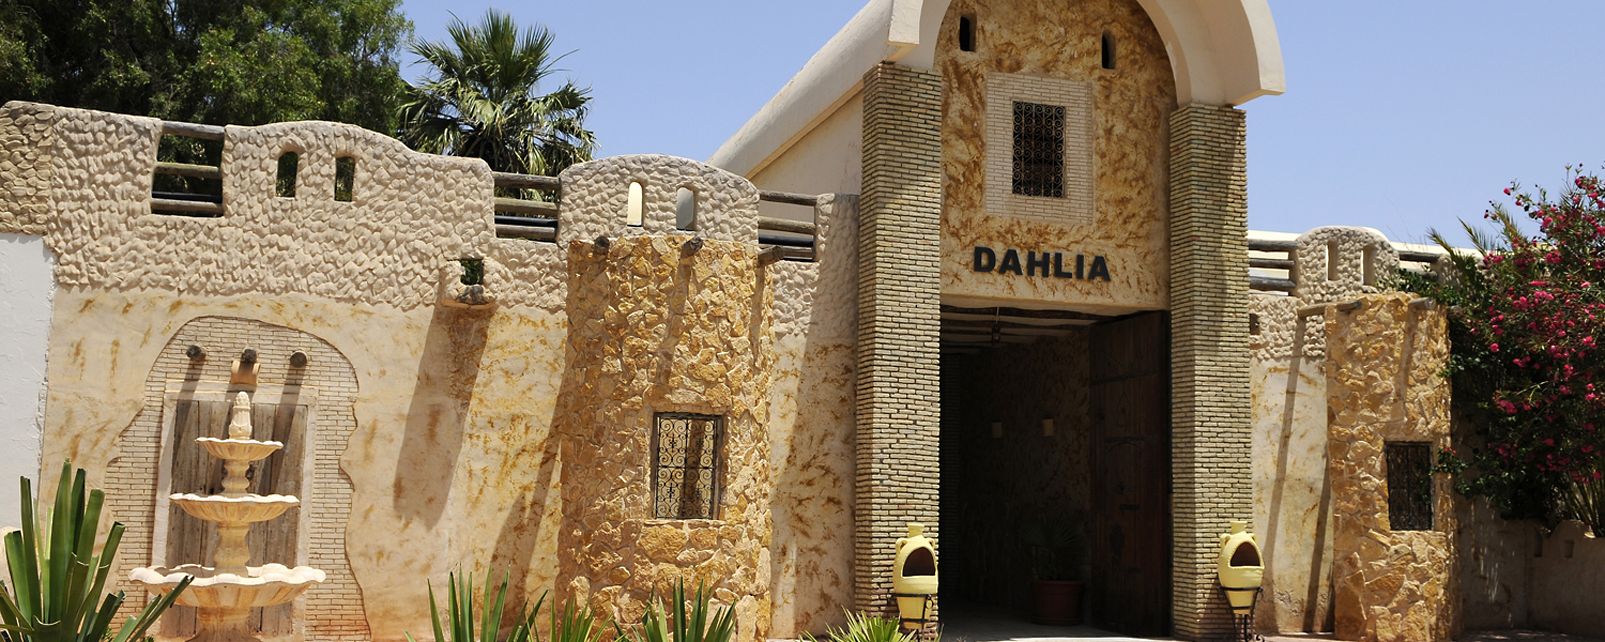 Hotel Dahlia - Dar Djerba